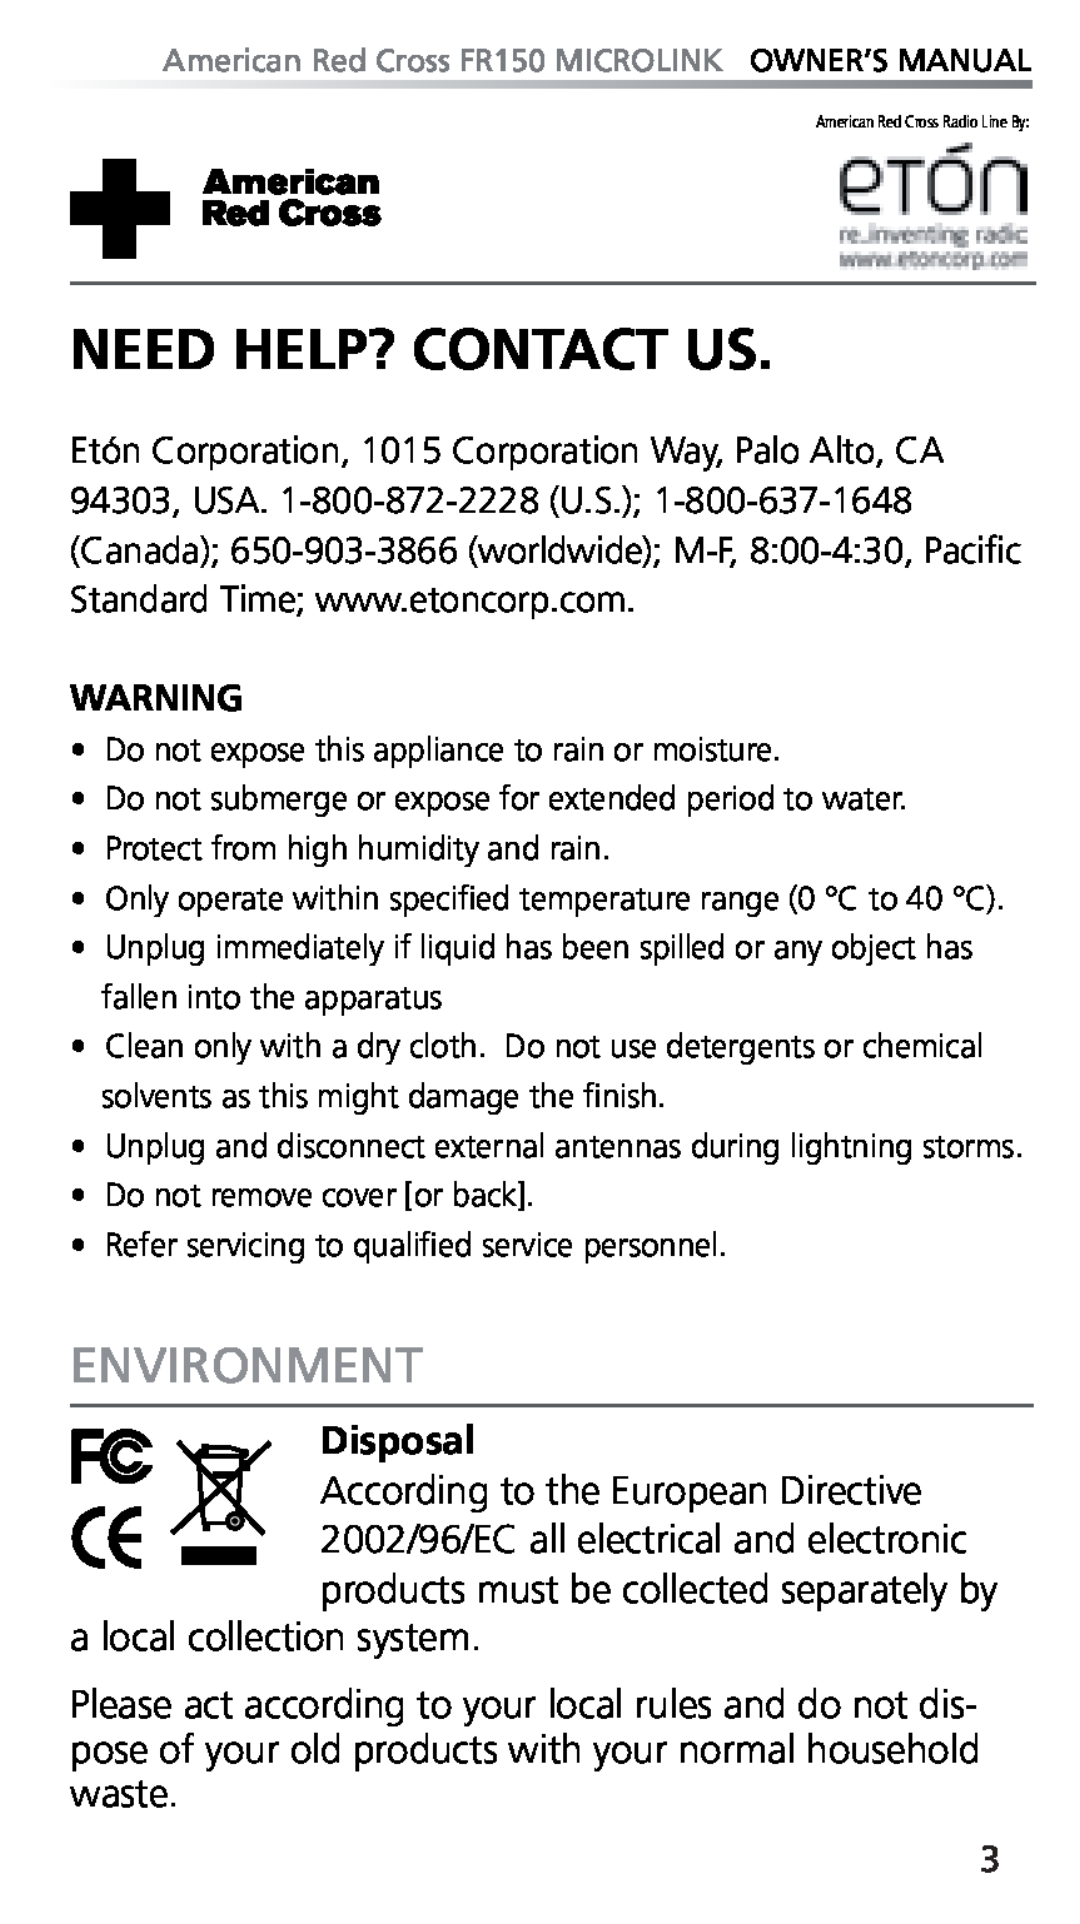 Eton FR150 owner manual Environment, Disposal, Need Help? Contact Us 